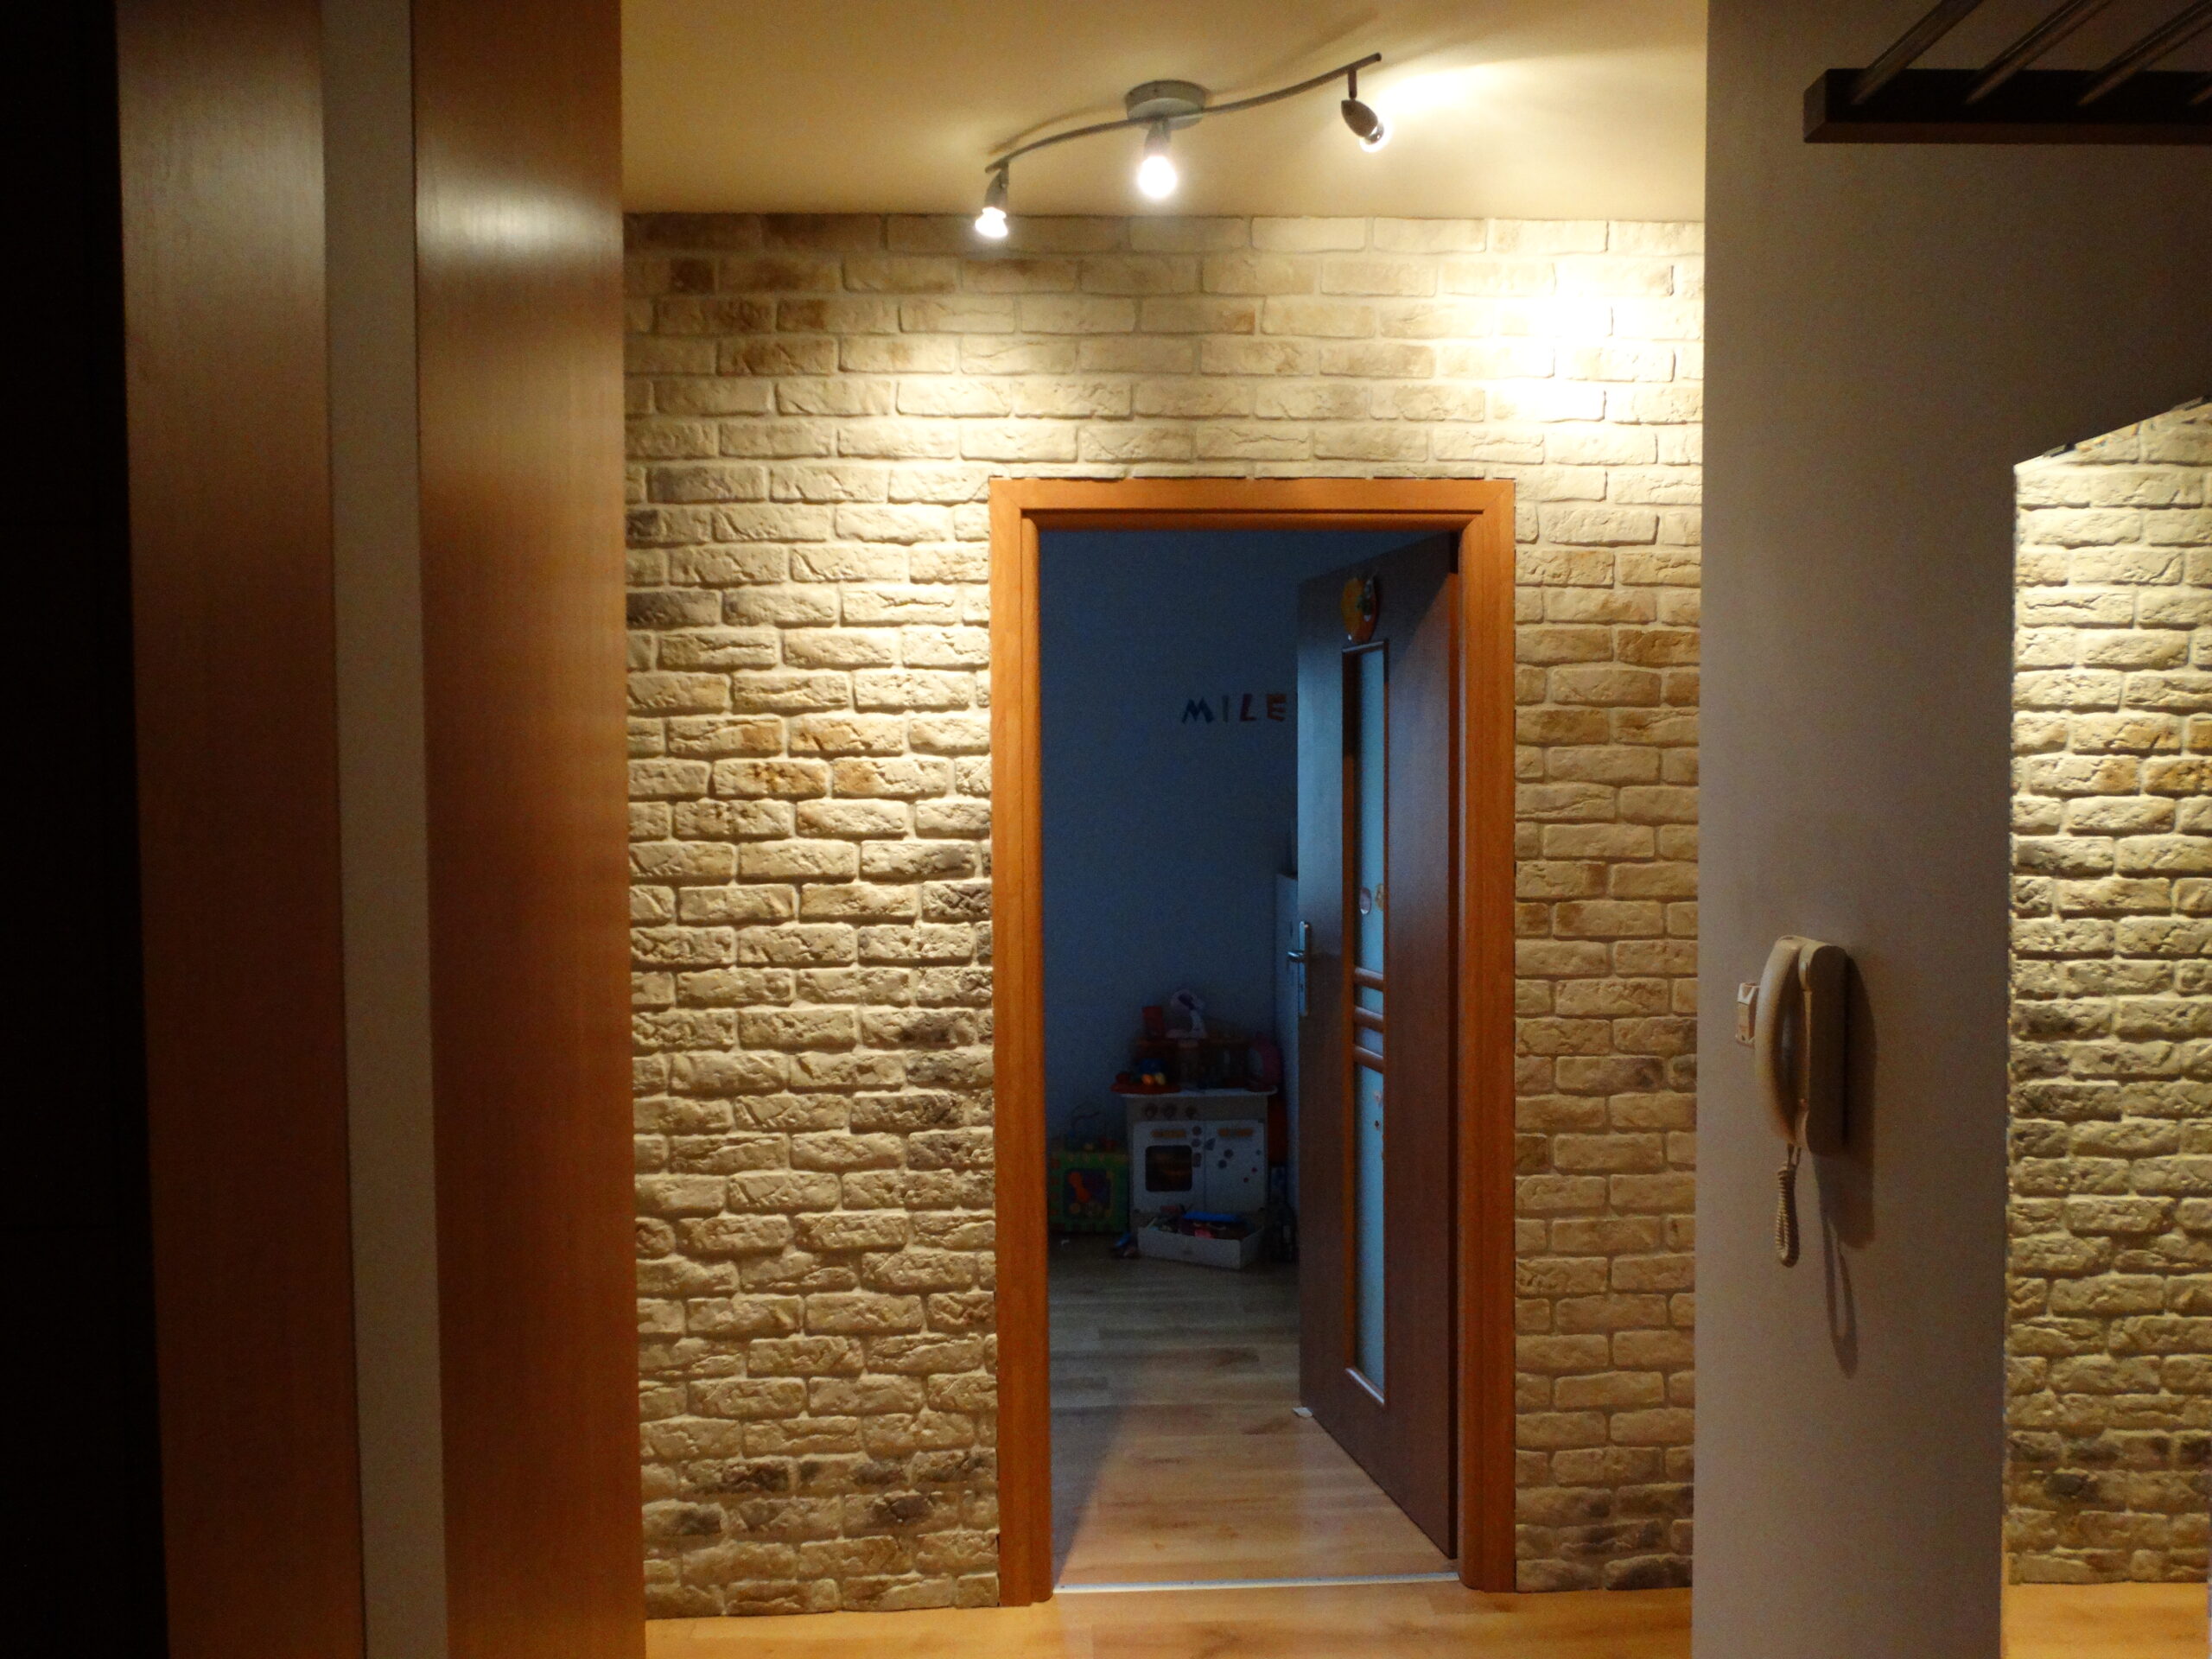 Renovation of the bathroom and corridor – ’17 Warsaw